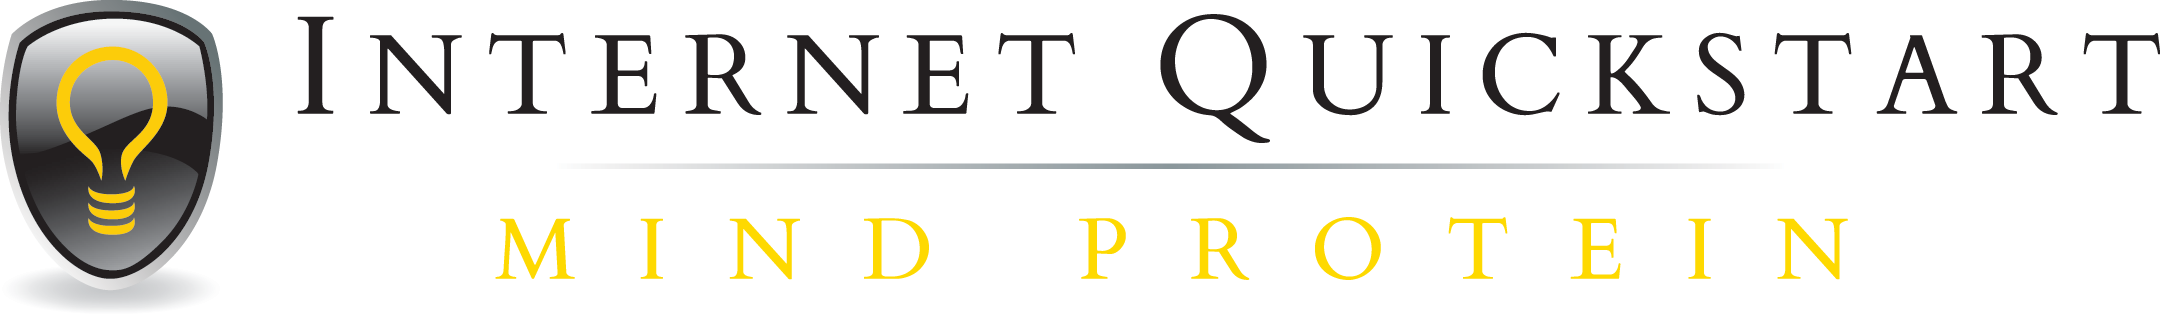 Internet Quickstart Logo